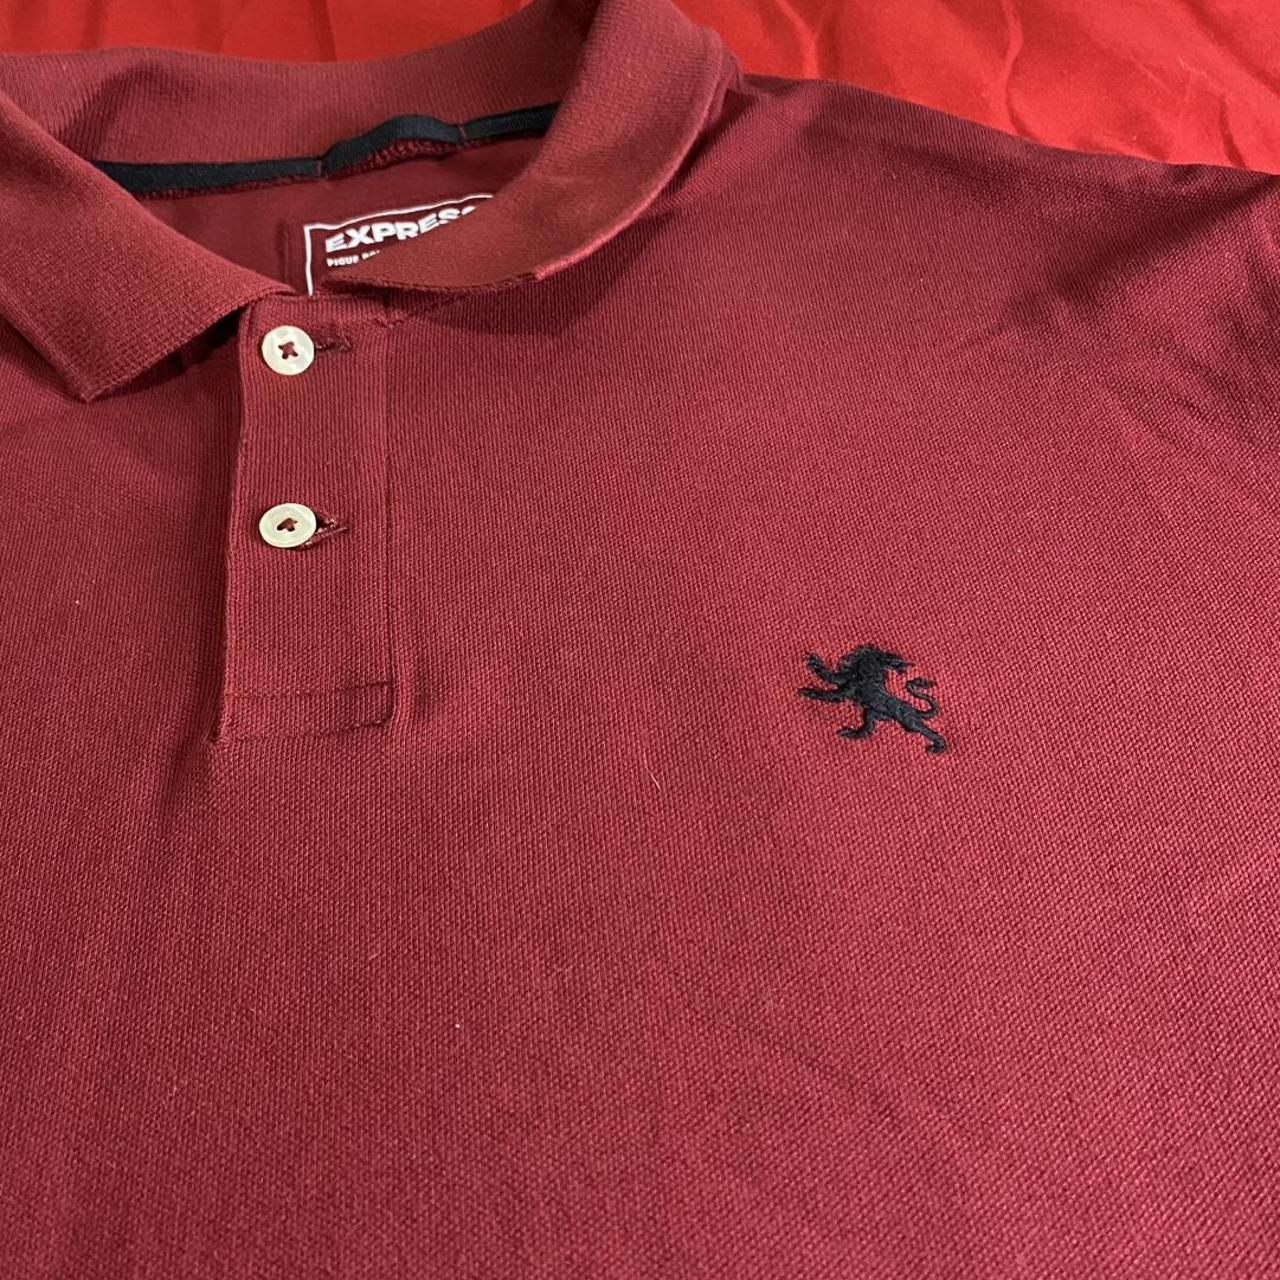 Express Men's Burgundy Polo-shirts (3)